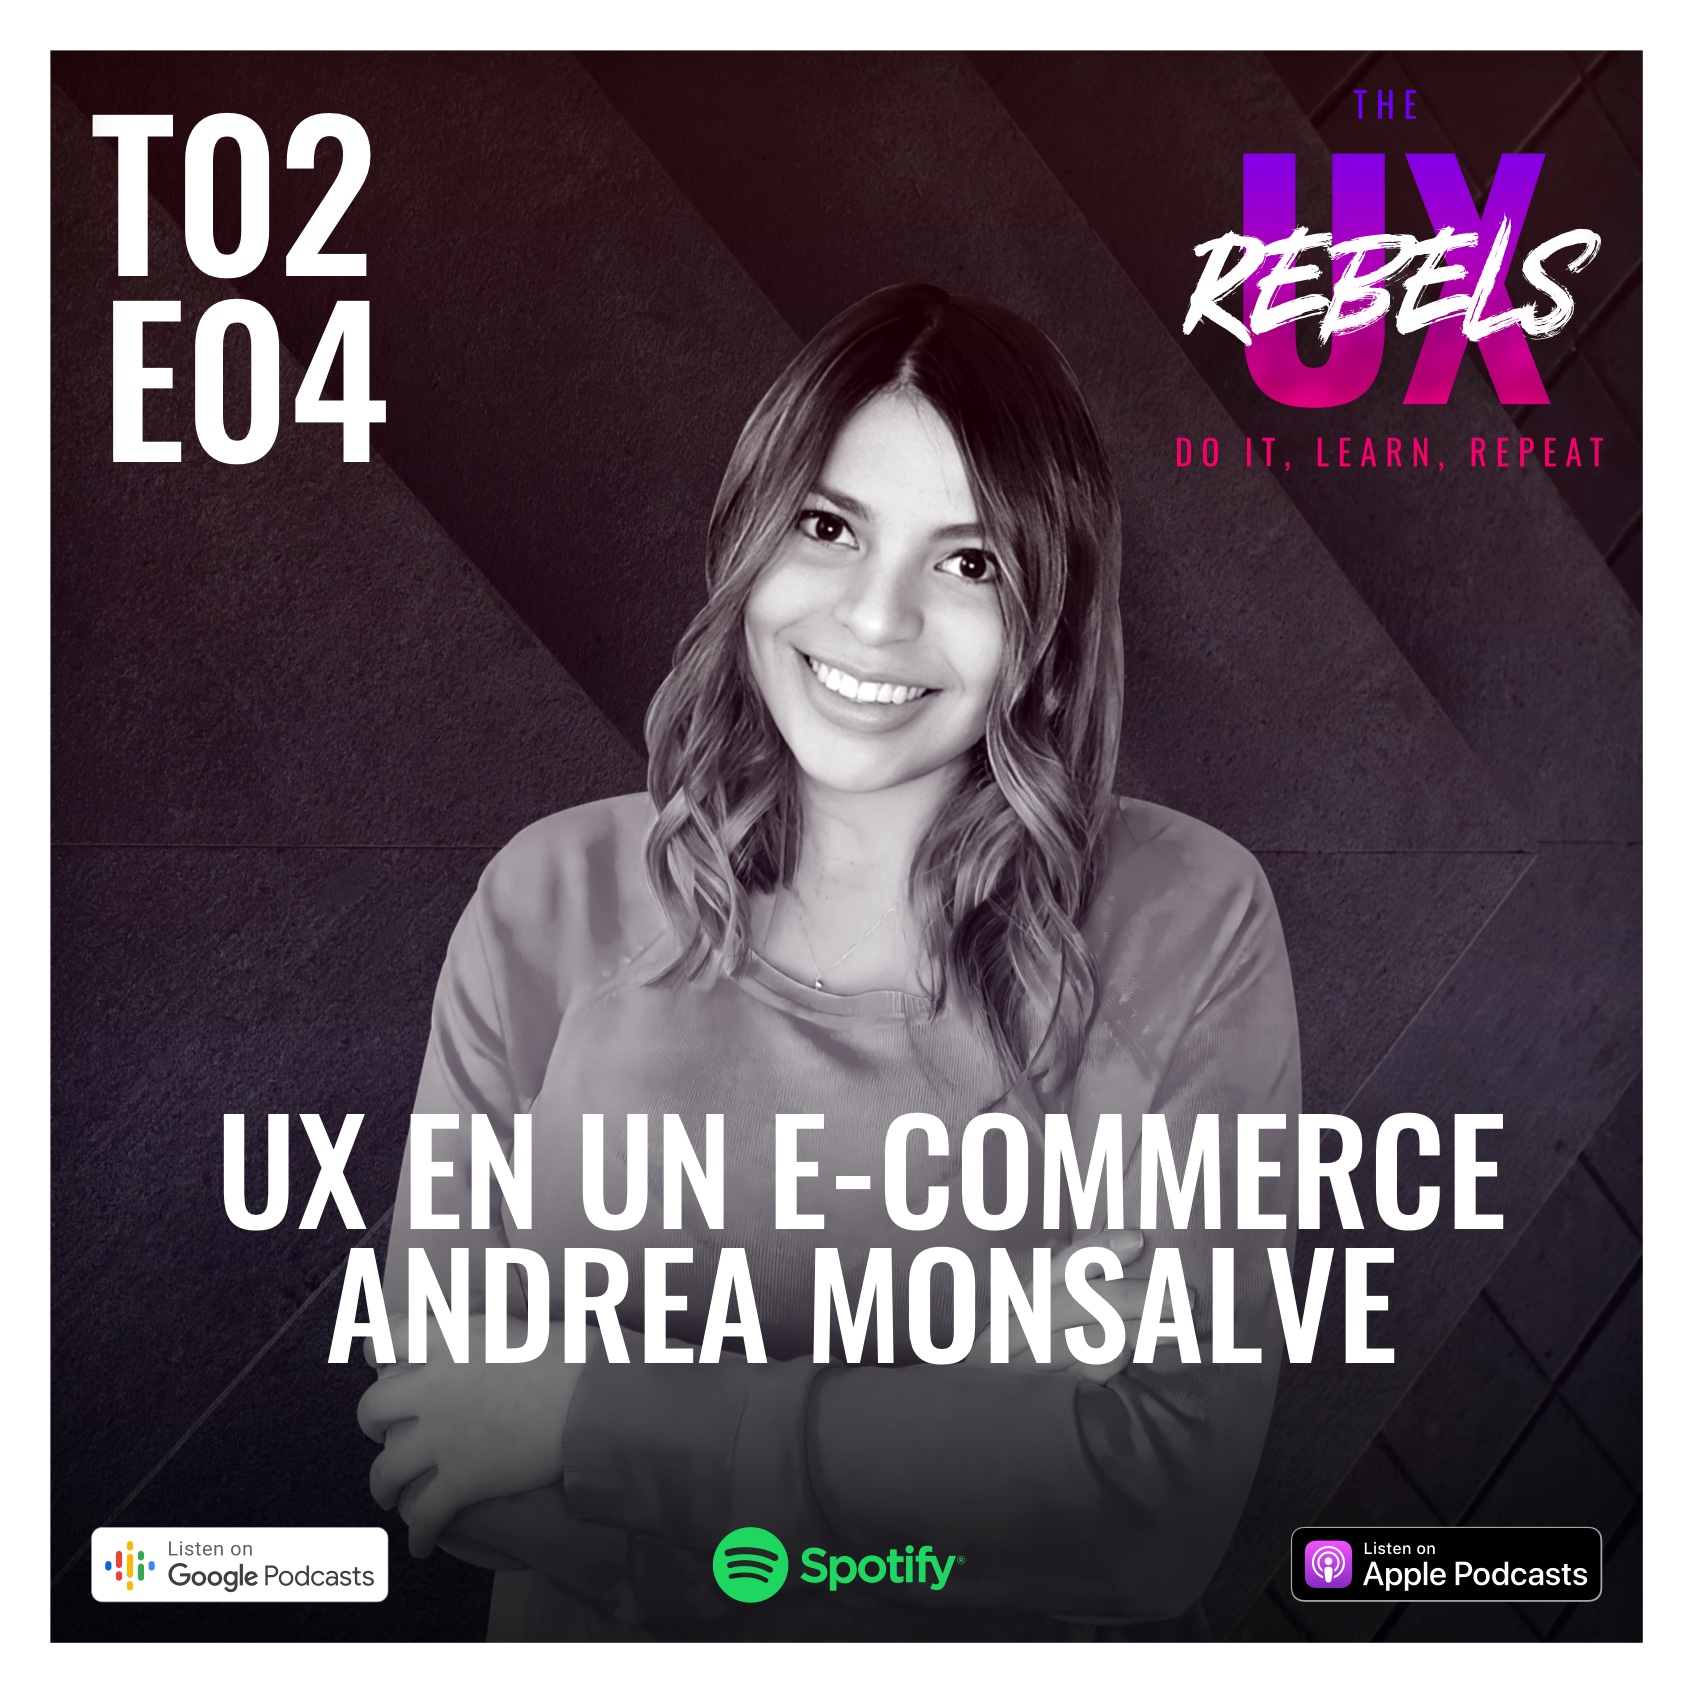 Andrea Monsalve en The UX Rebels sobre e-commerce